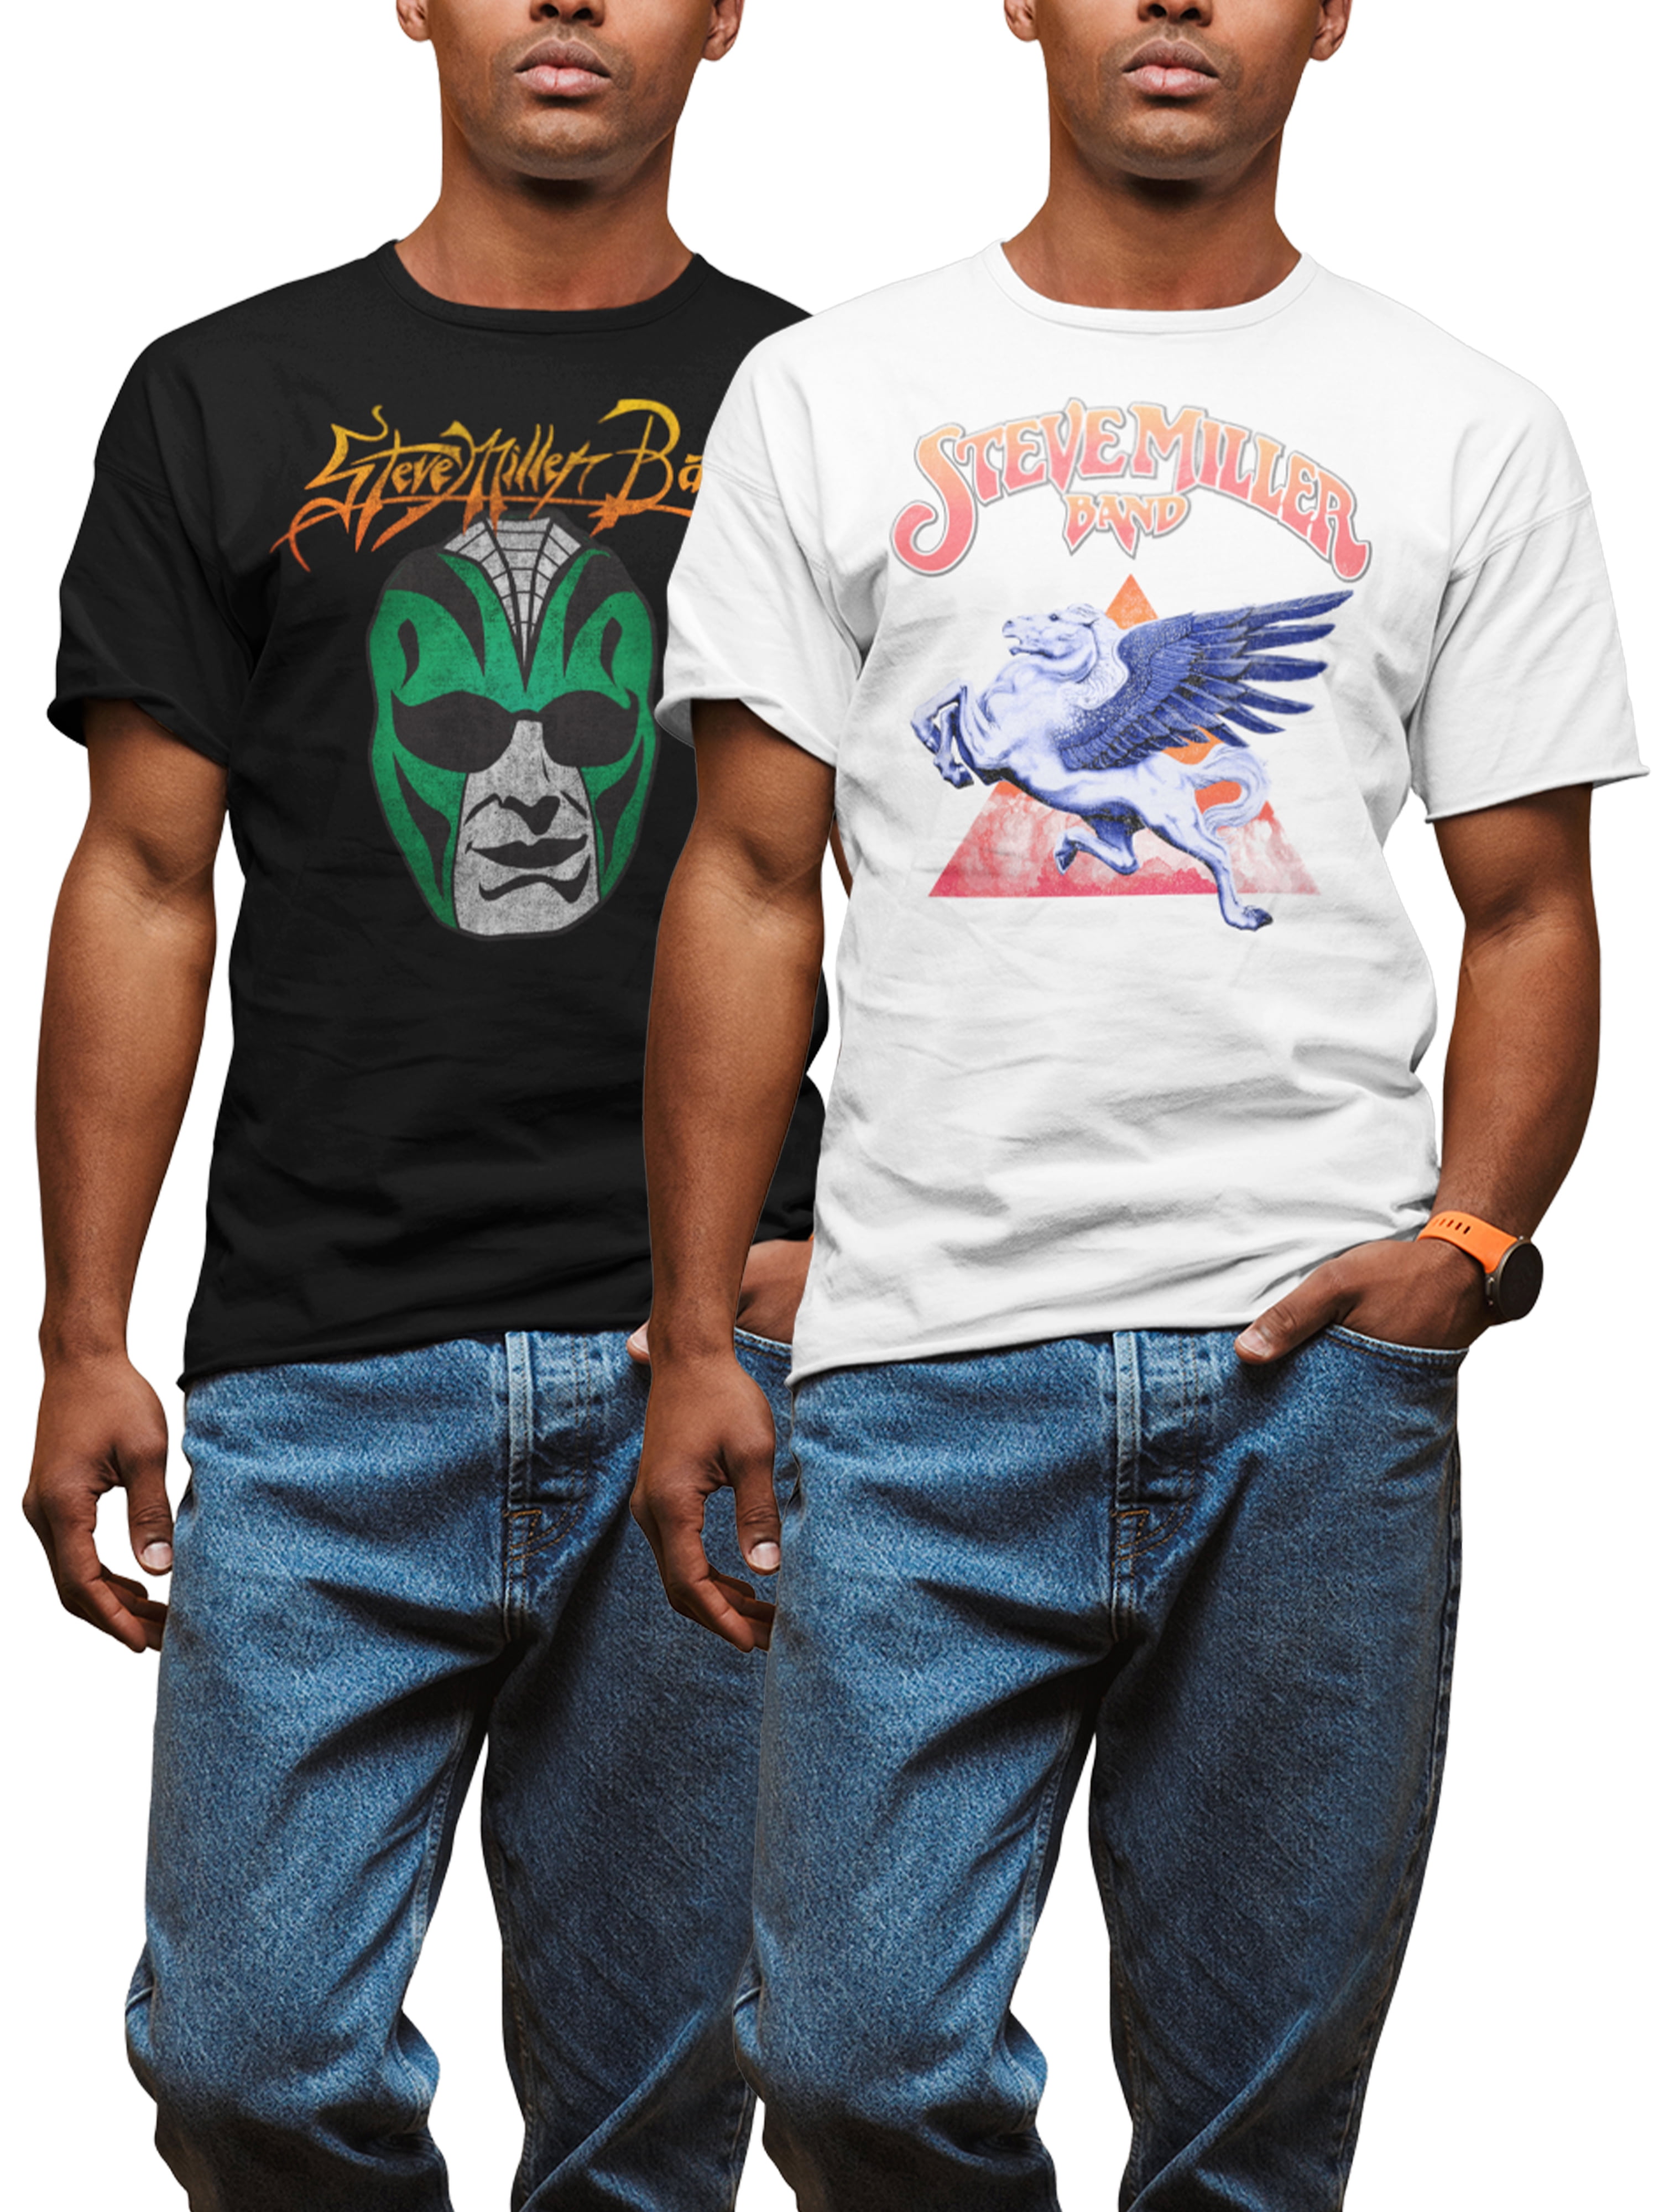 100% Cotton Black or White Warrant Shirt 80s Music Band Shirt Glam Metal Hard Rock| Vintage Retro Sizes S to 3XL